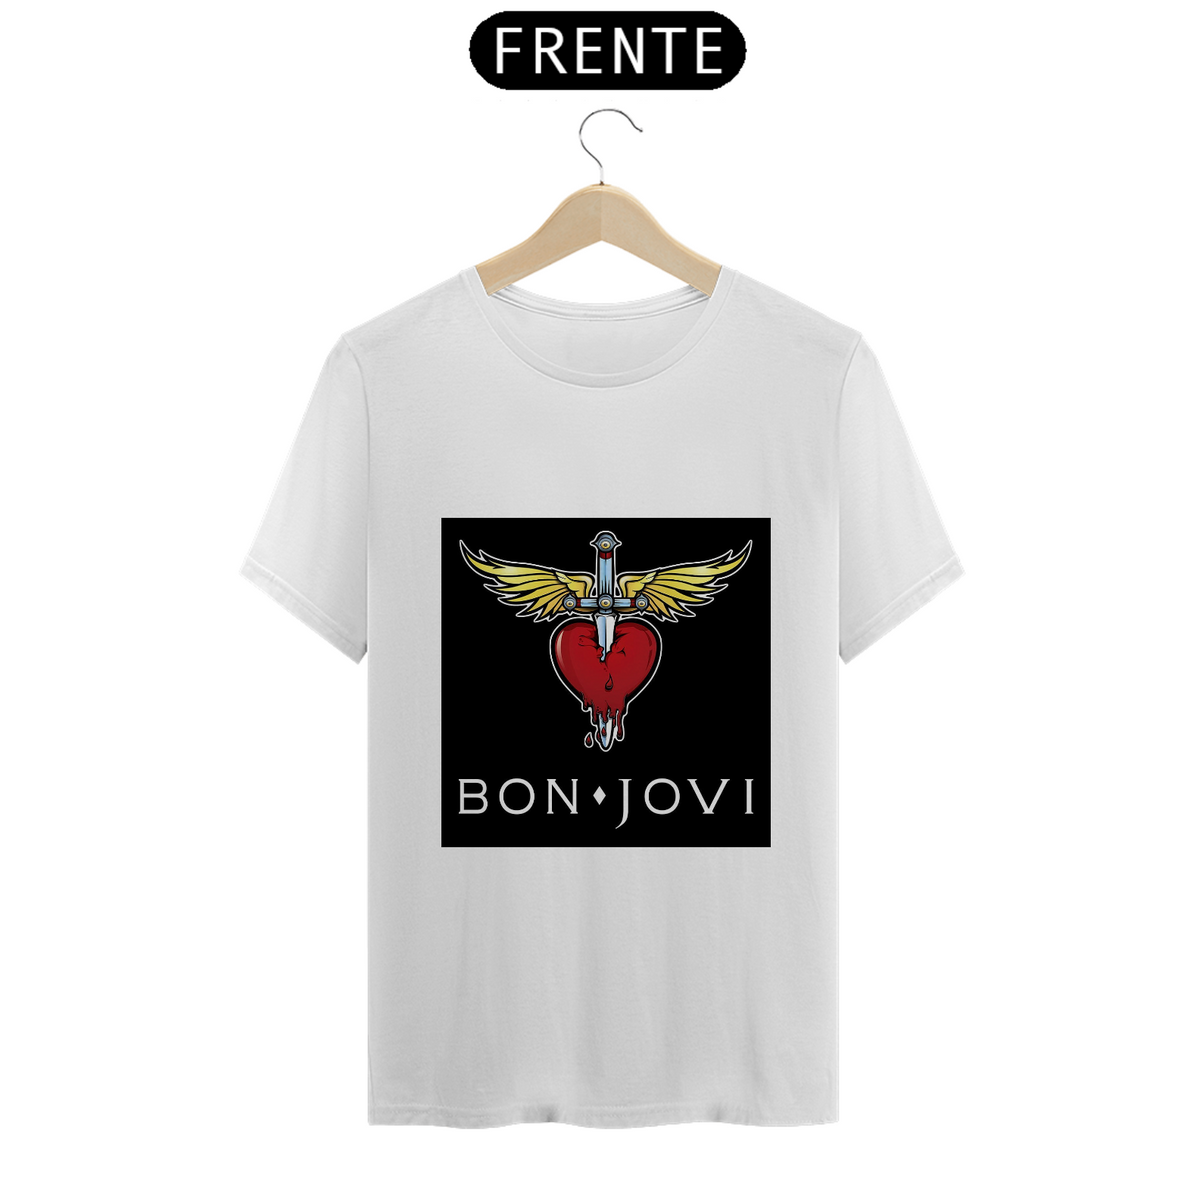 Nome do produto: Camiseta Bon Jovi